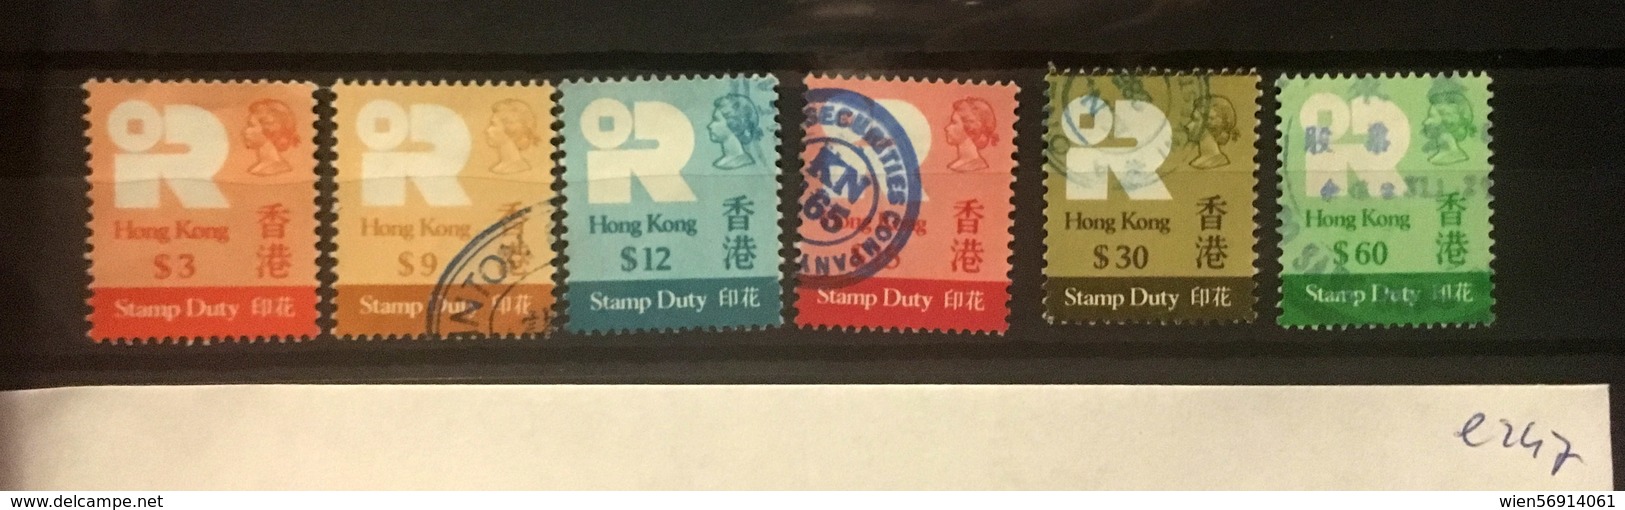 E247 Hong Kong Collection - Postage Due